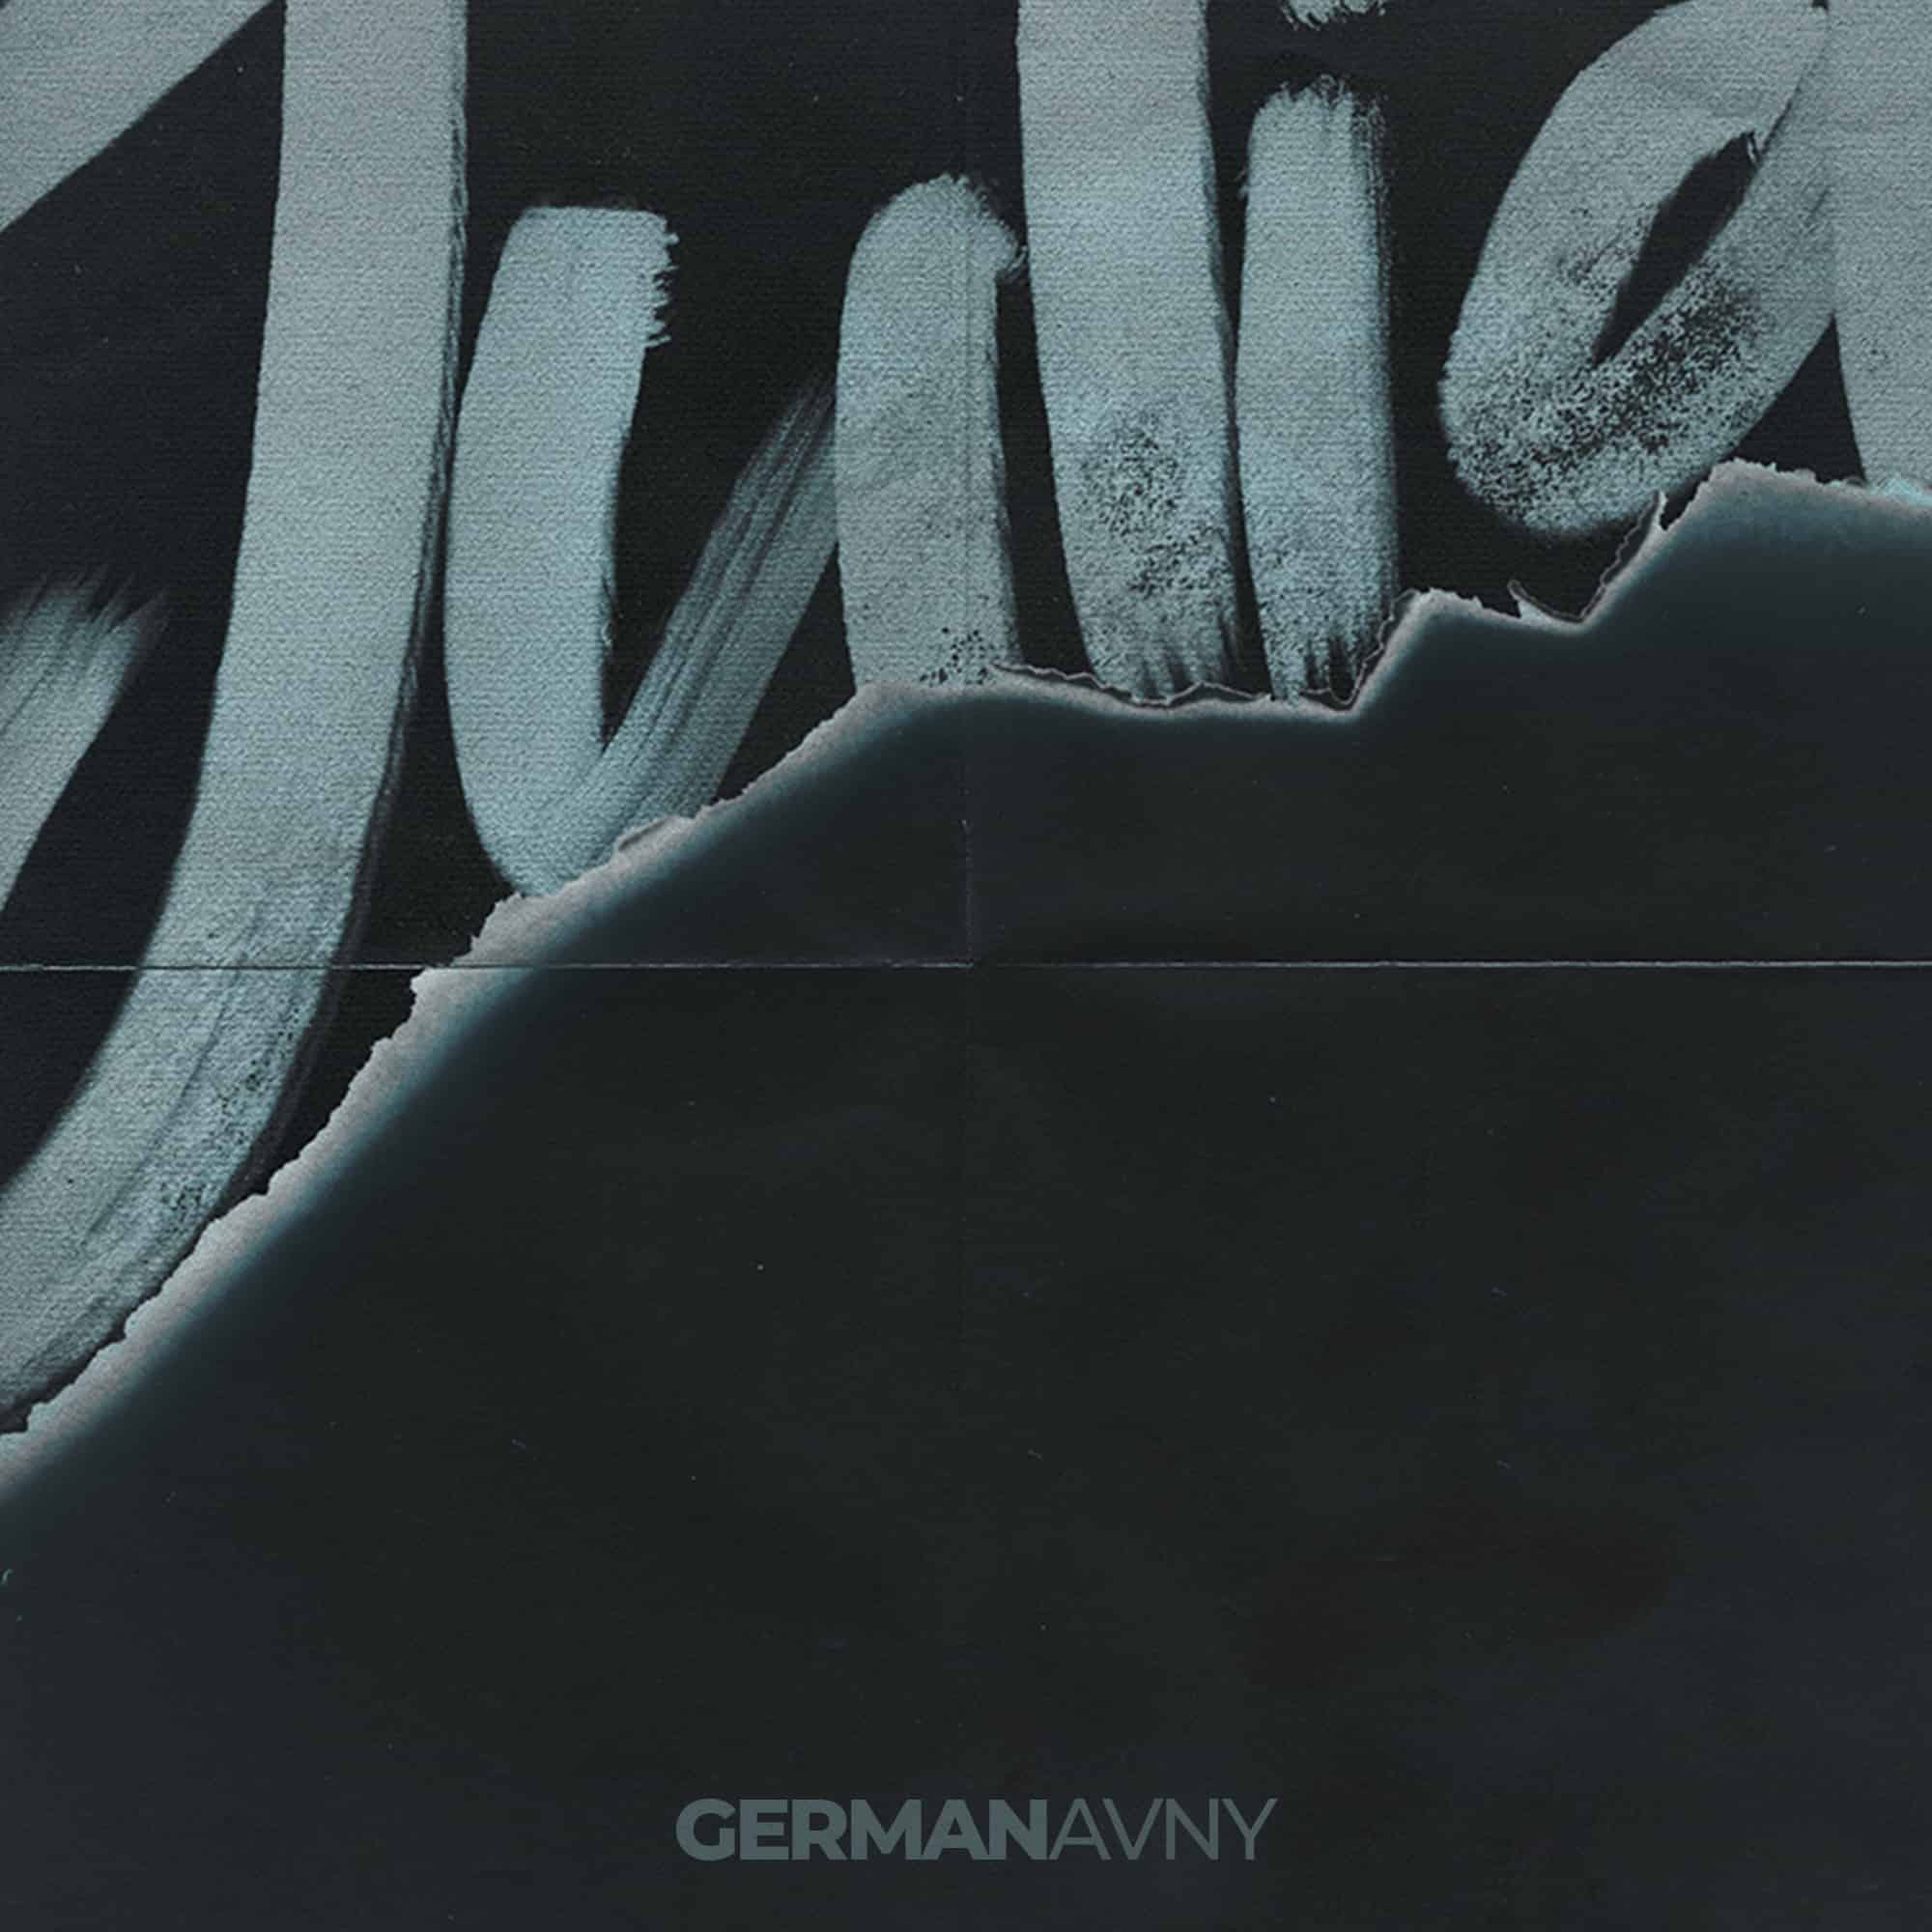 German Avny - Julia